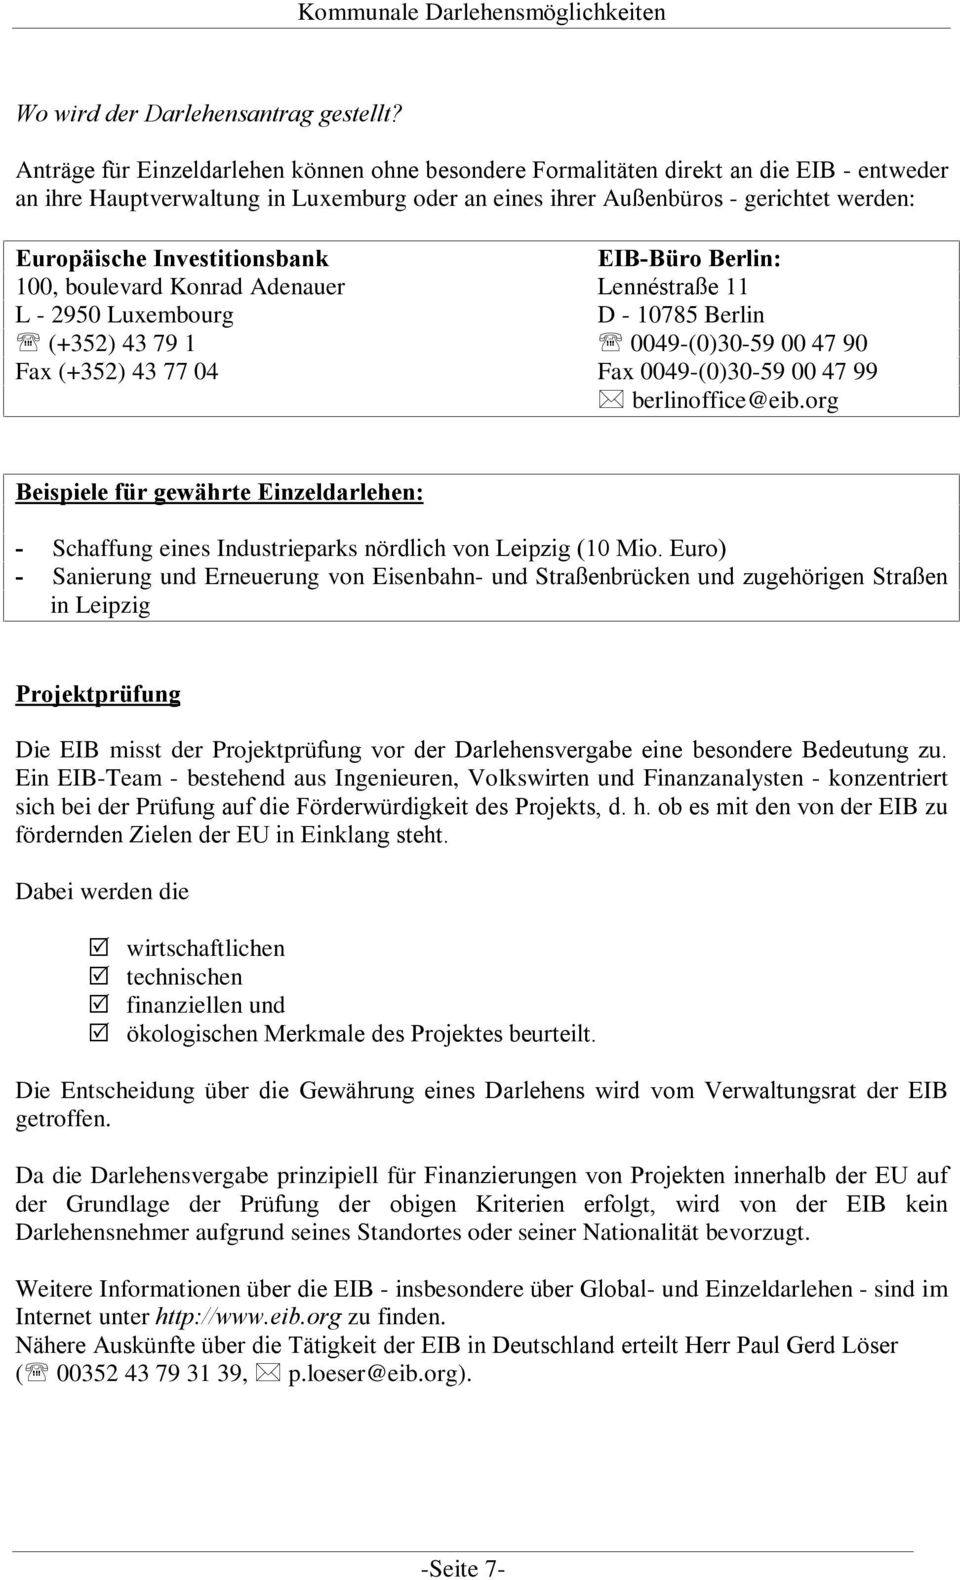 Investitionsbank EIB-Büro Berlin: 100, boulevard Konrad Adenauer Lennéstraße 11 L - 2950 Luxembourg D - 10785 Berlin (+352) 43 79 1 0049-(0)30-59 00 47 90 Fax (+352) 43 77 04 Fax 0049-(0)30-59 00 47